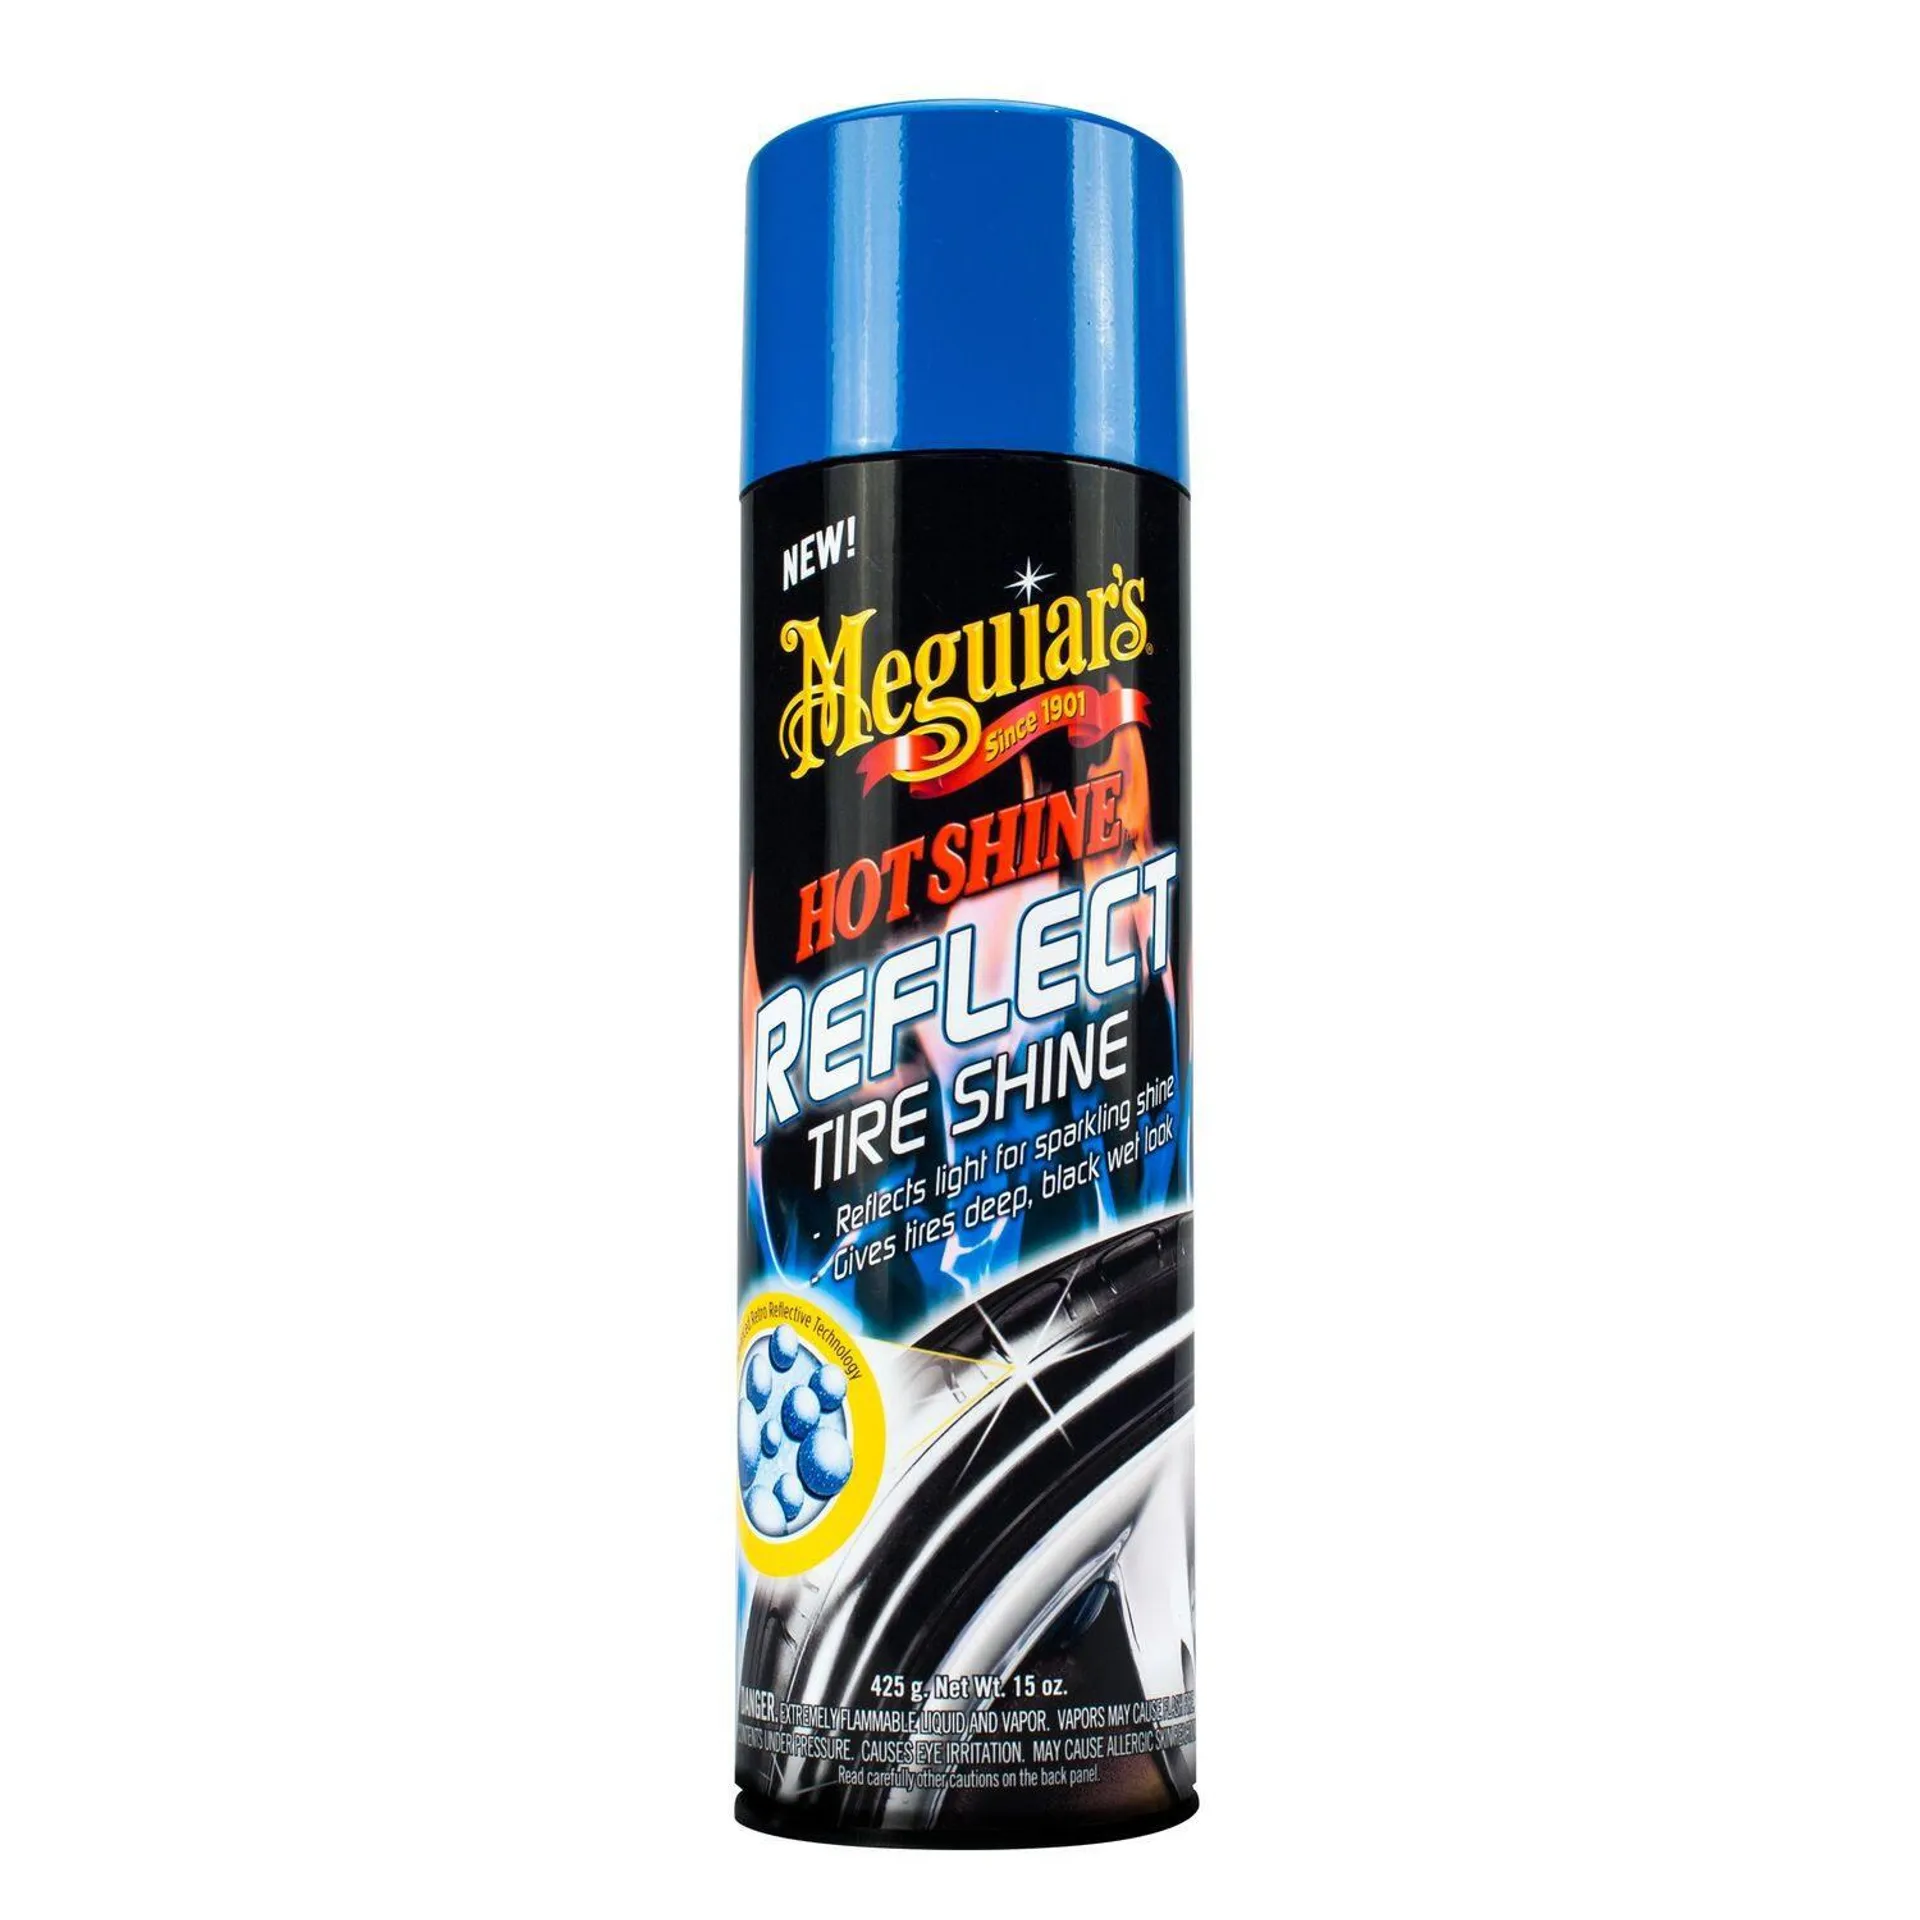 Meguiar's Hot Shine Reflect Tire Shine Spray 15oz